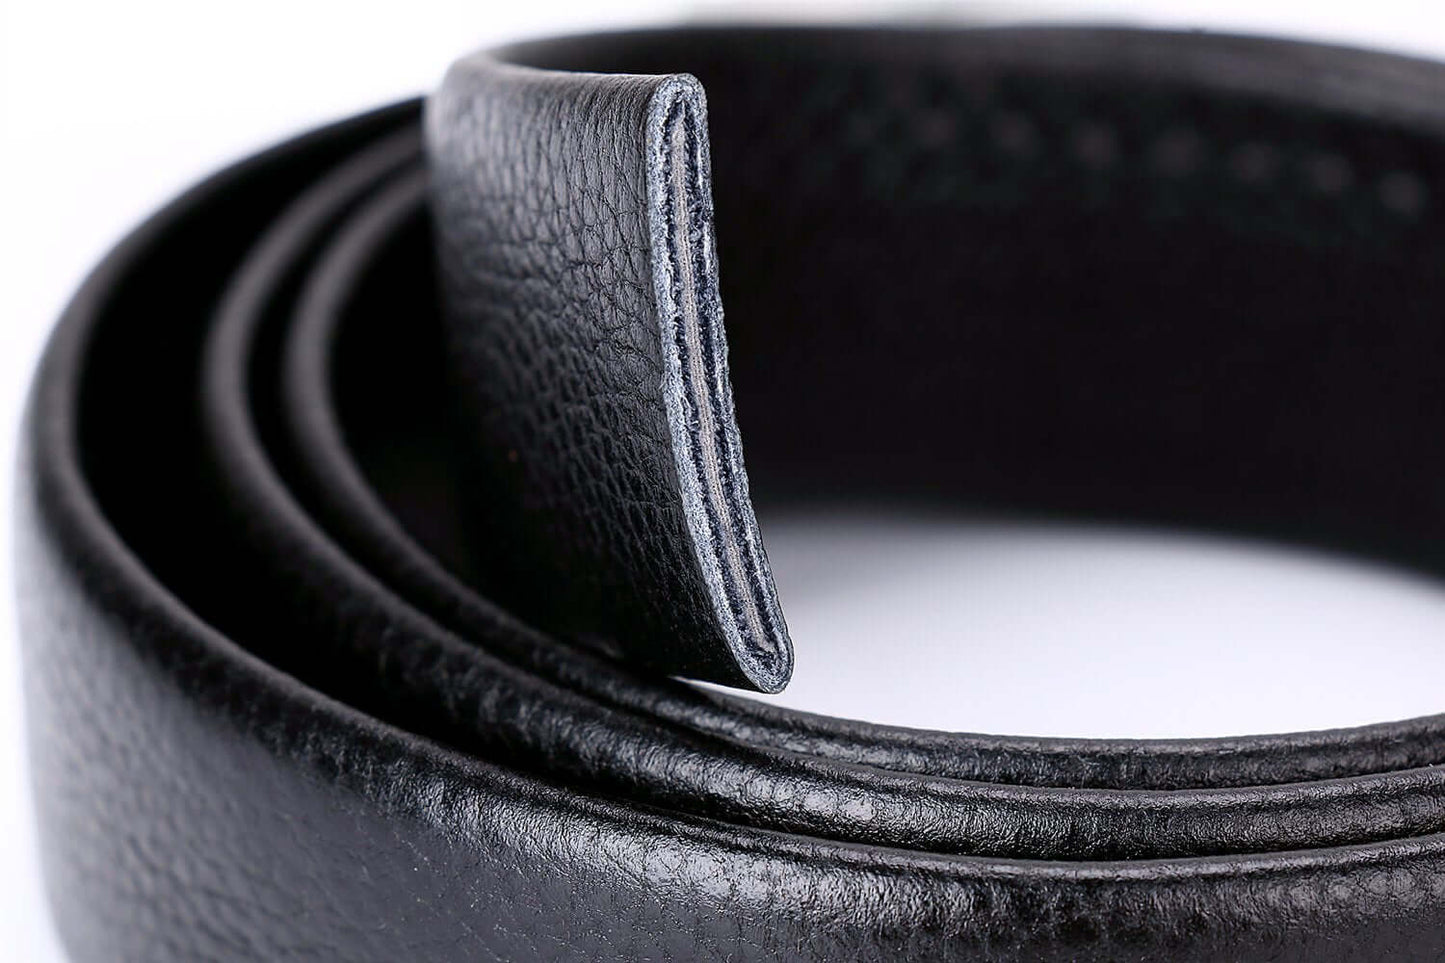 BeltBuy Automatic- Buckle Cowhide Leather Belt - Beltbuy Store